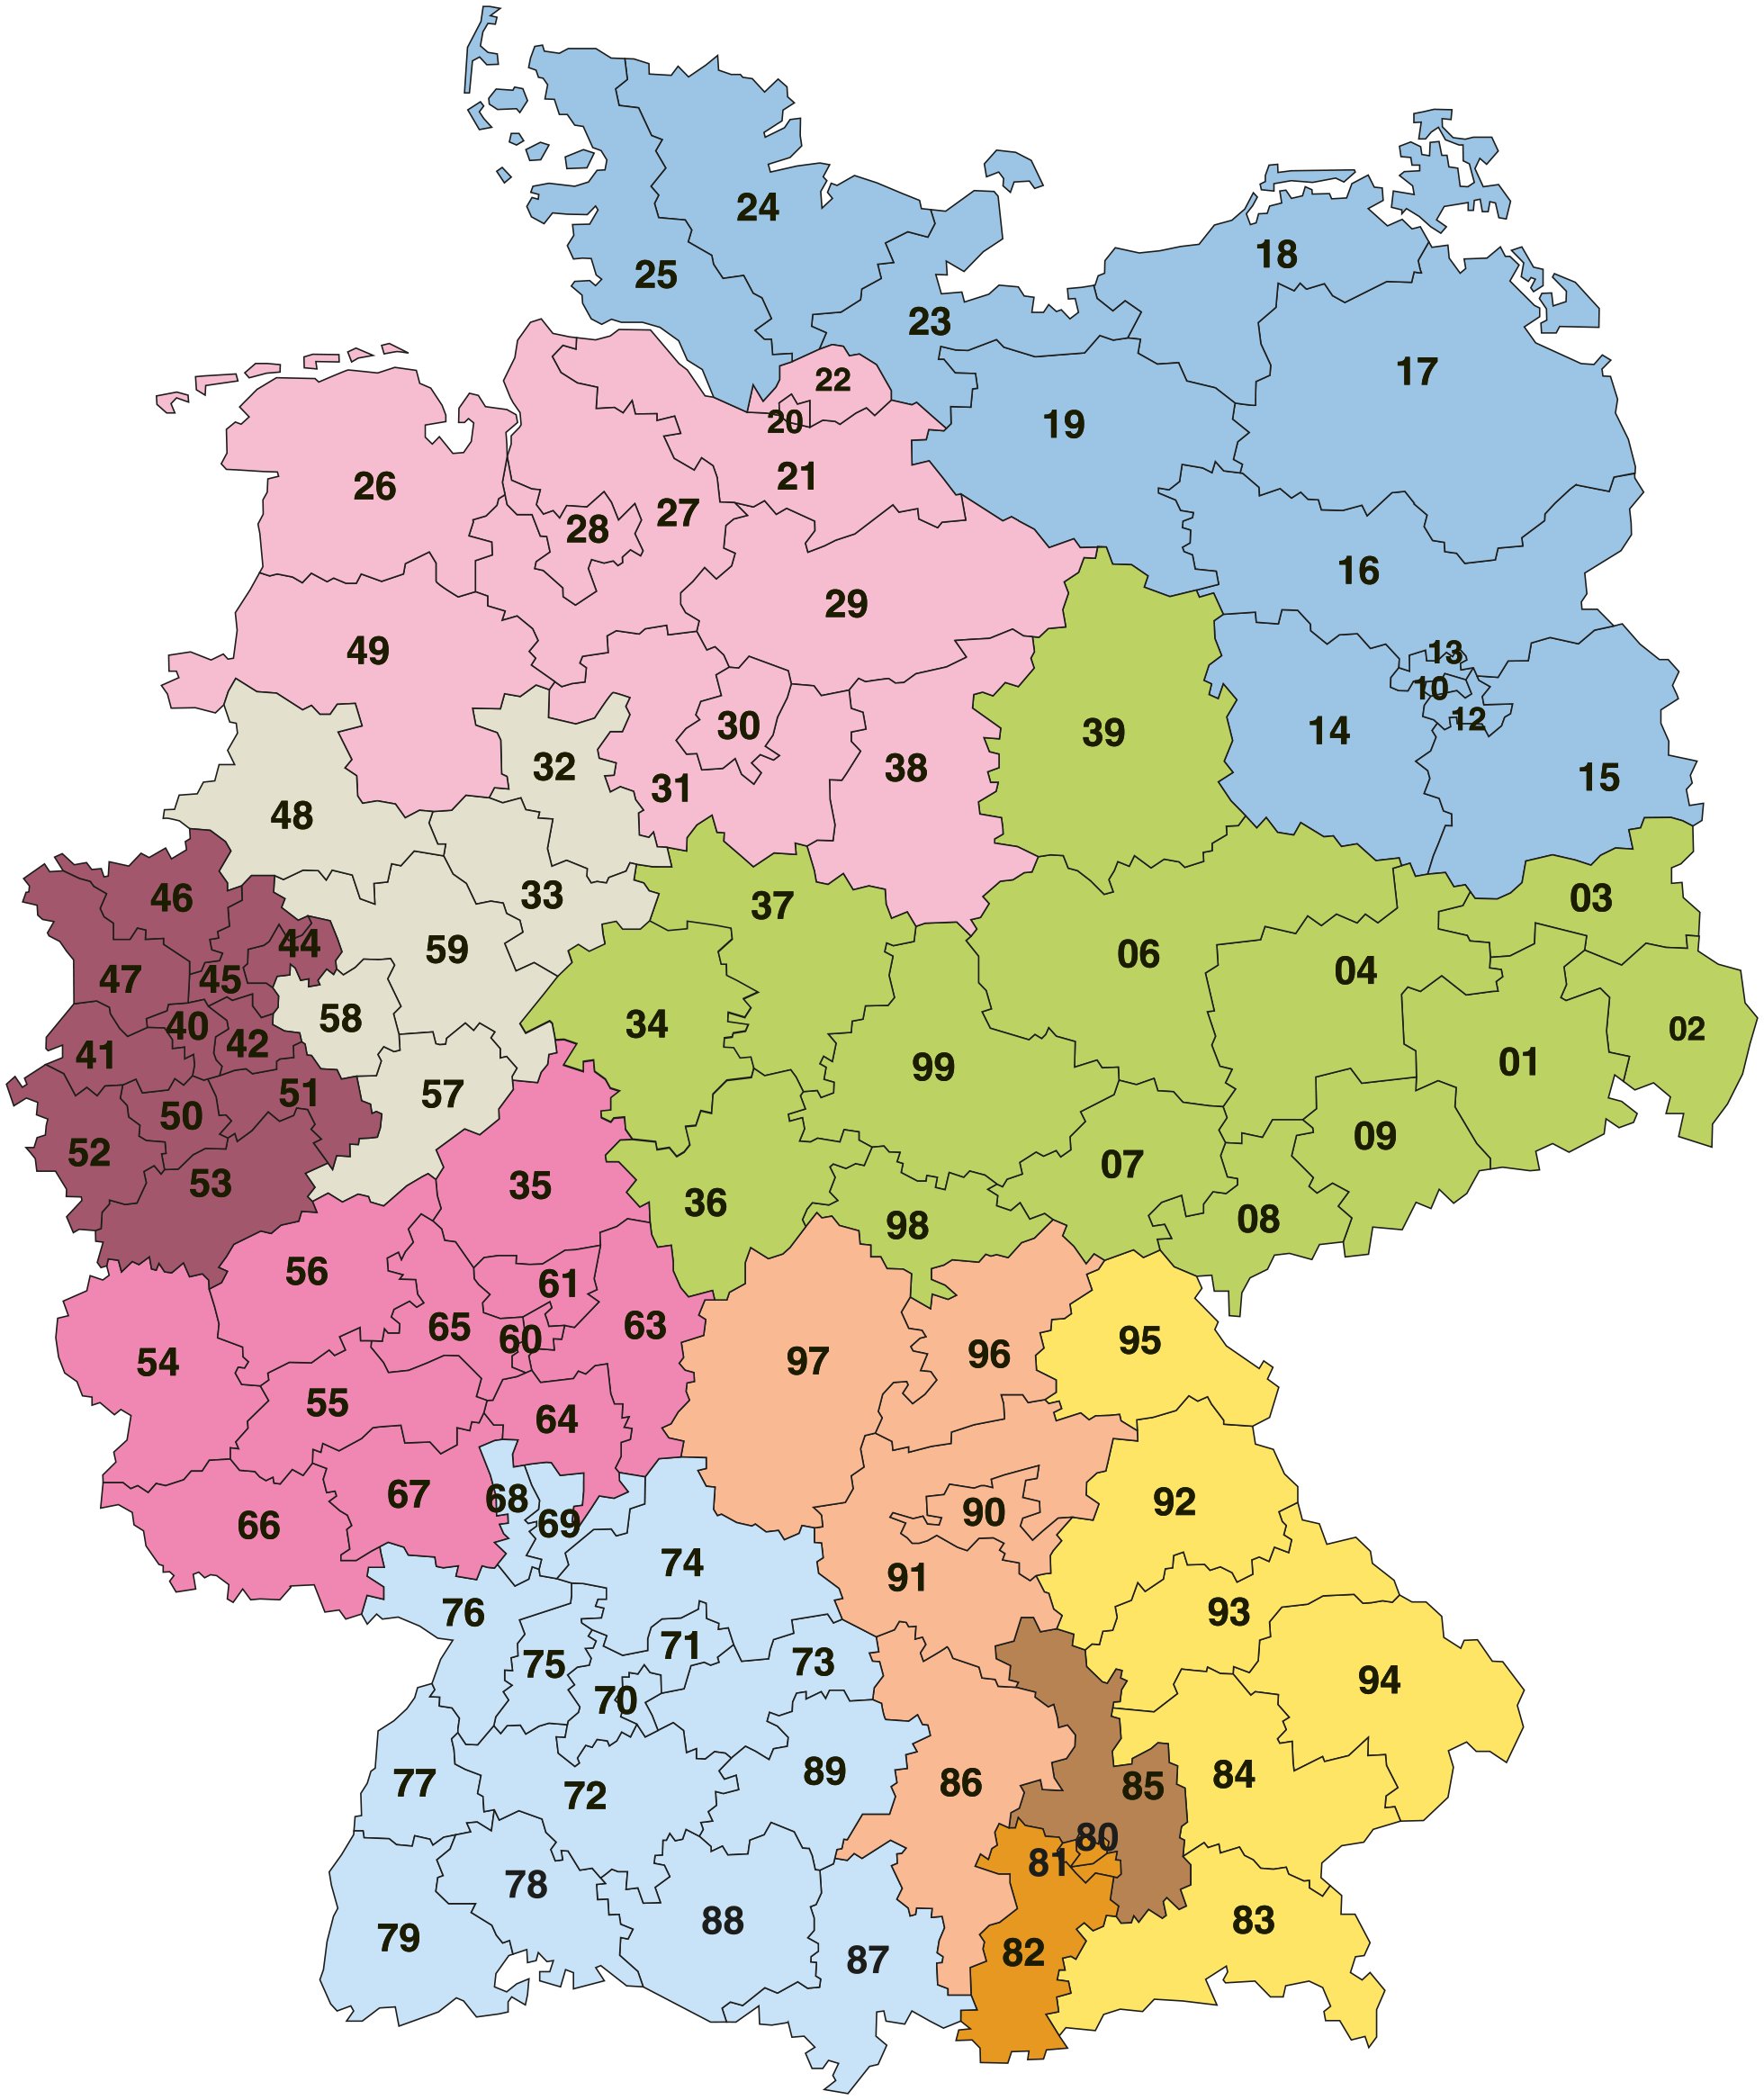 Gebietskarte Deutschland